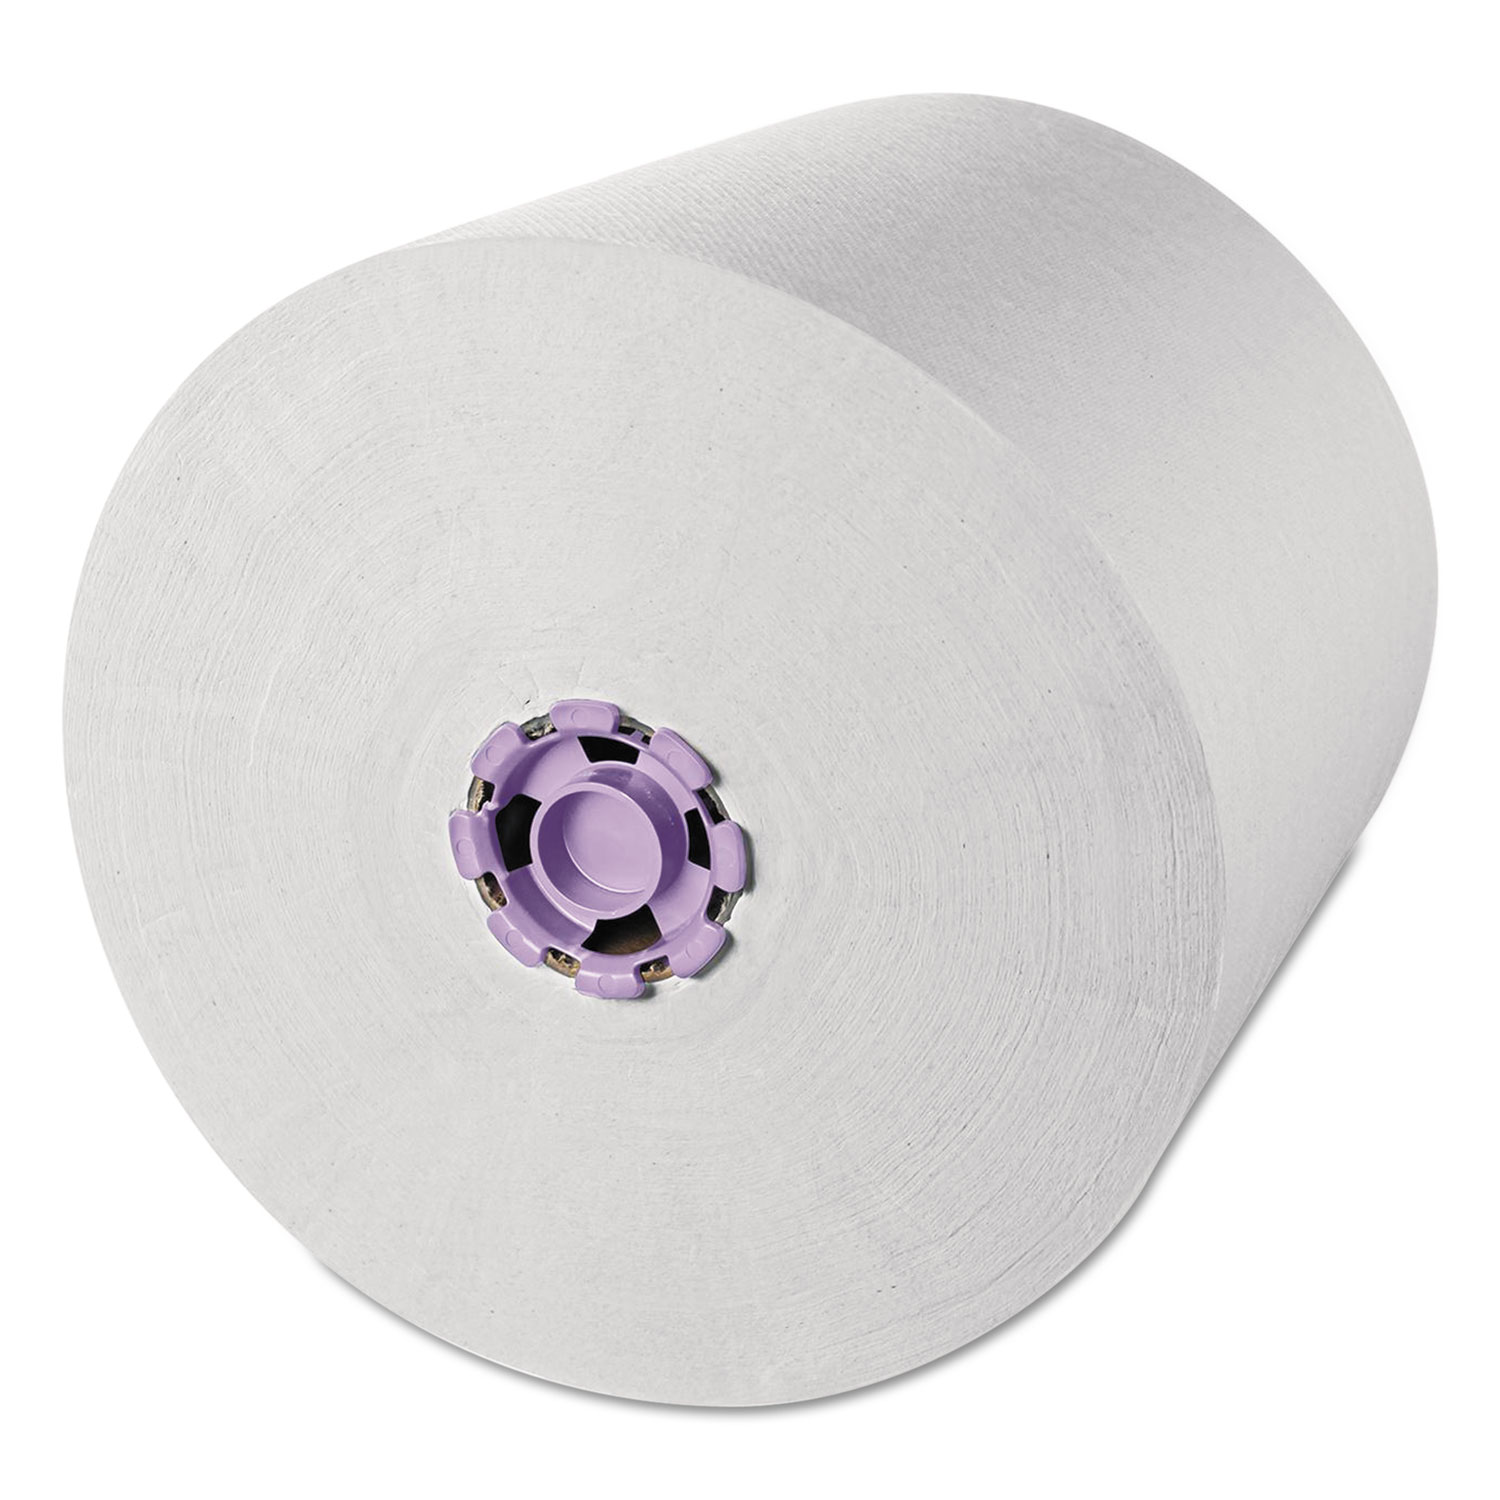  Scott 02001 Essential High Capacity Hard Roll Towel, White, 8 x 950 ft, 6 Rolls/Carton (KCC02001) 